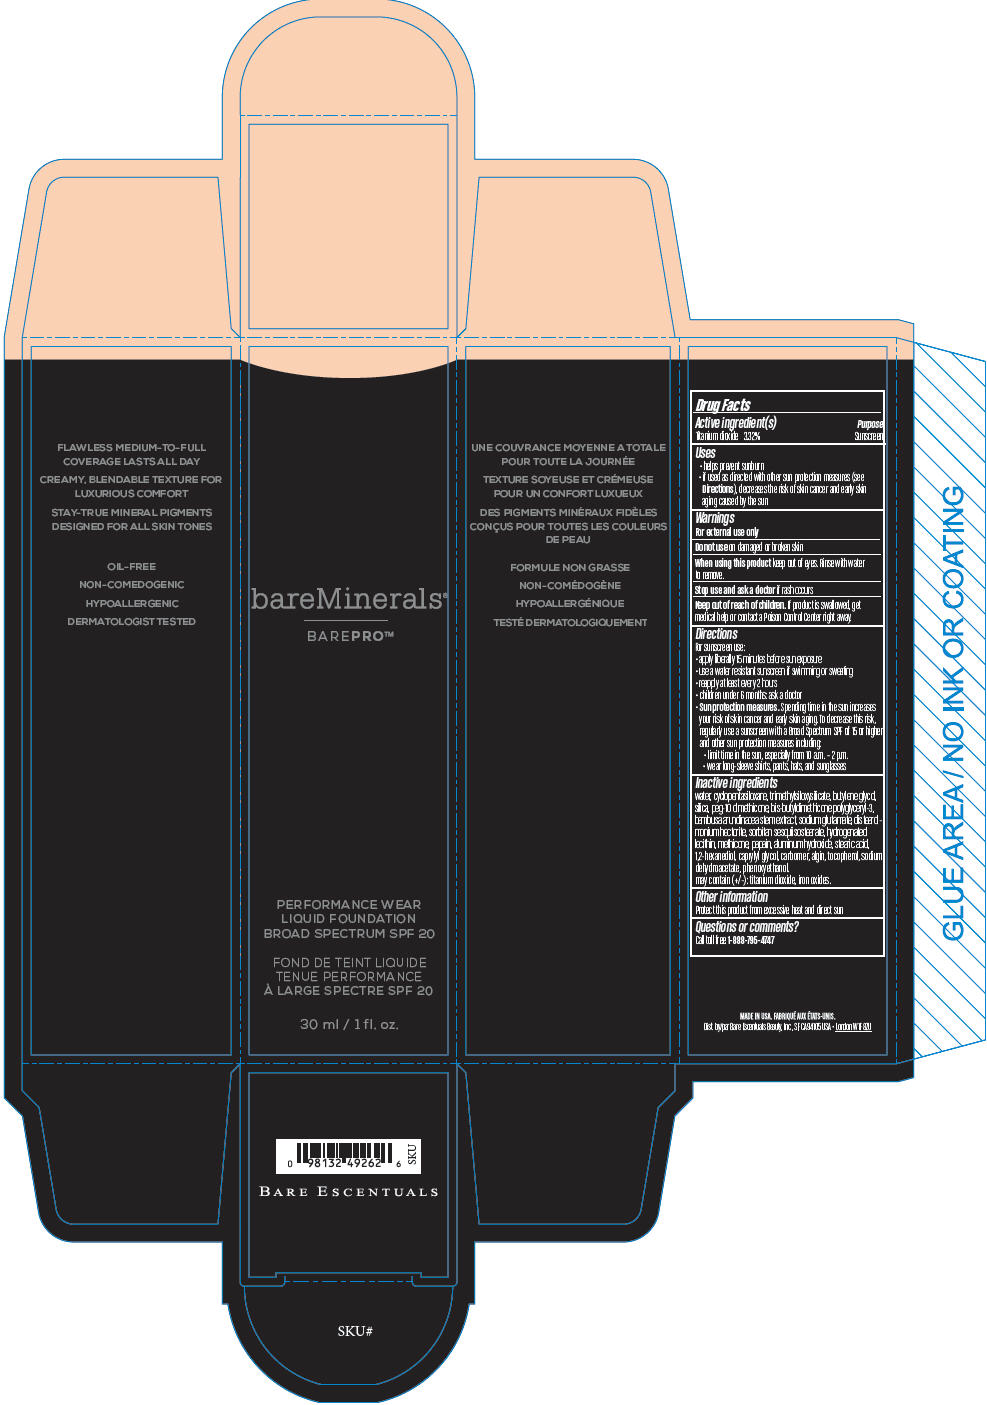 PRINCIPAL DISPLAY PANEL - 30 ml Bottle Carton - Toffee 19